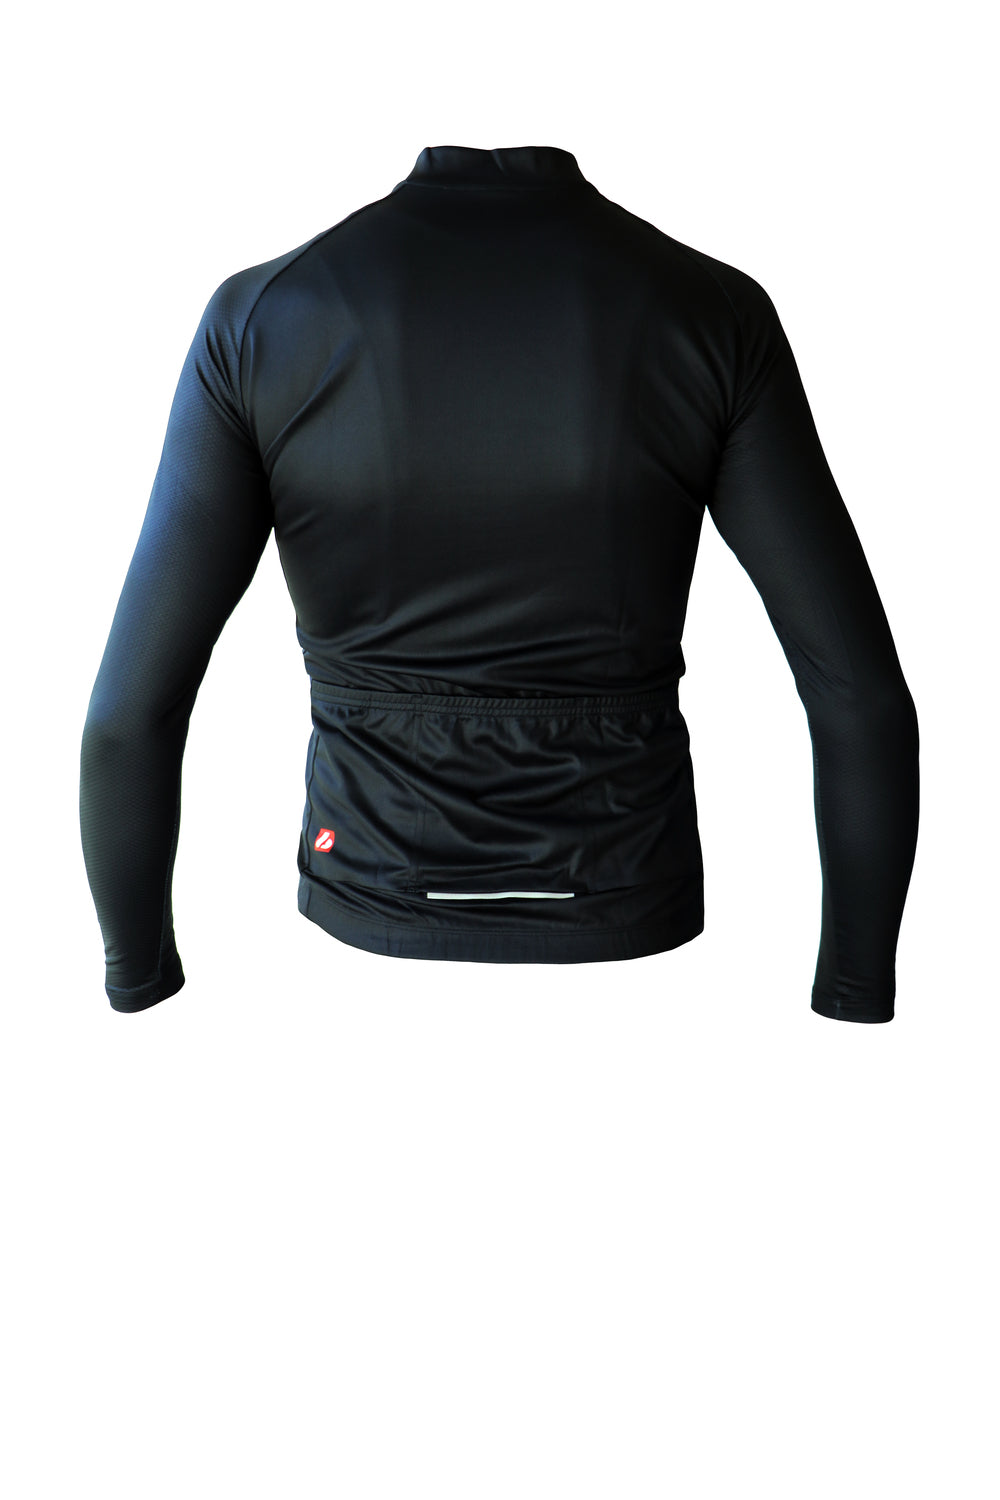 Bike textile - long sleeved Jersey, black&white